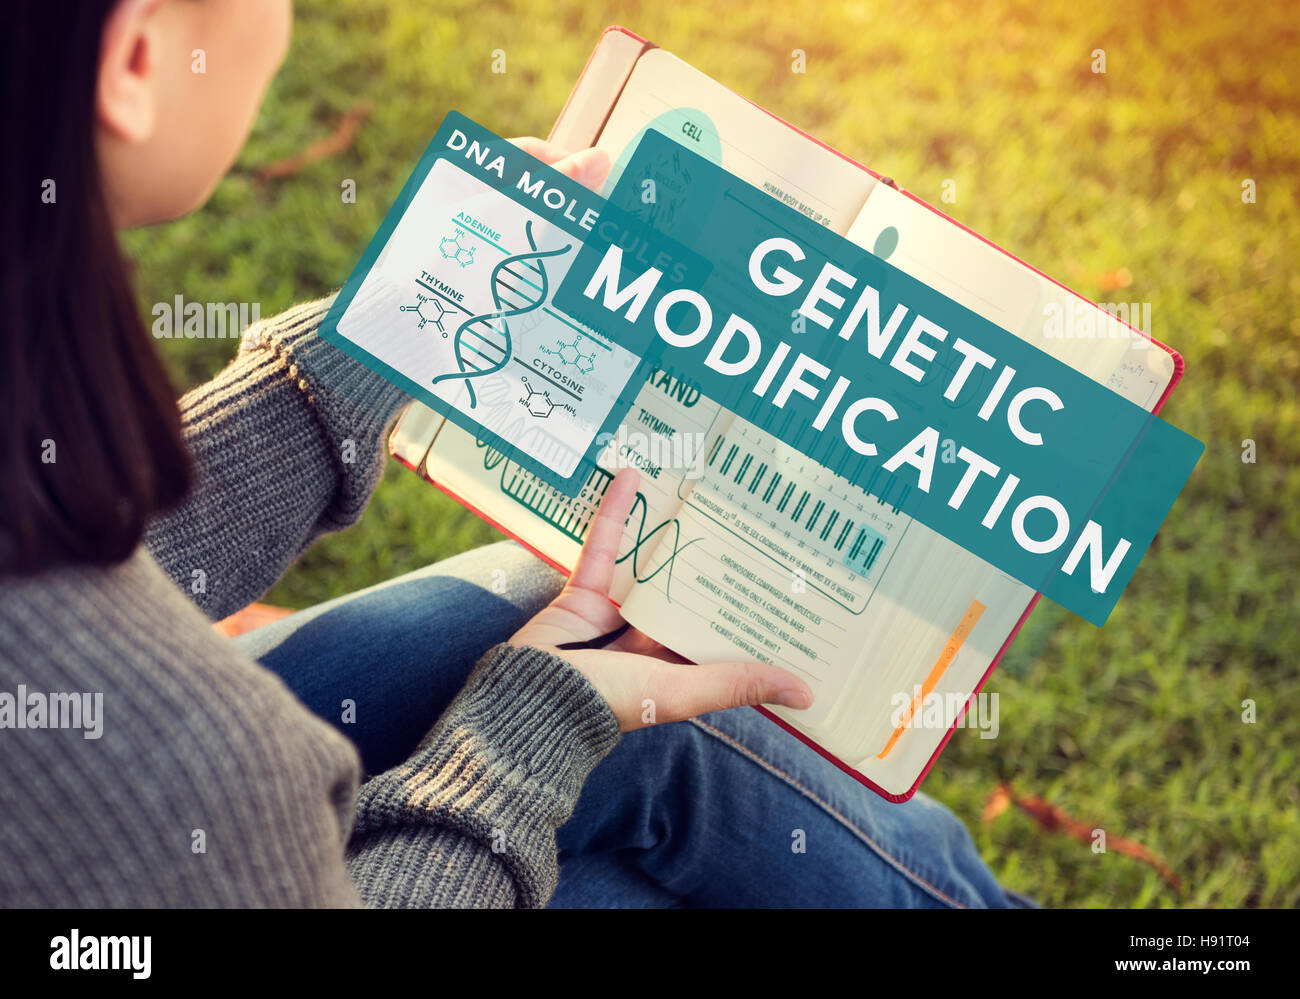 Genetische Mutation Modifikationskonzept Biologie Chemie Stockfoto